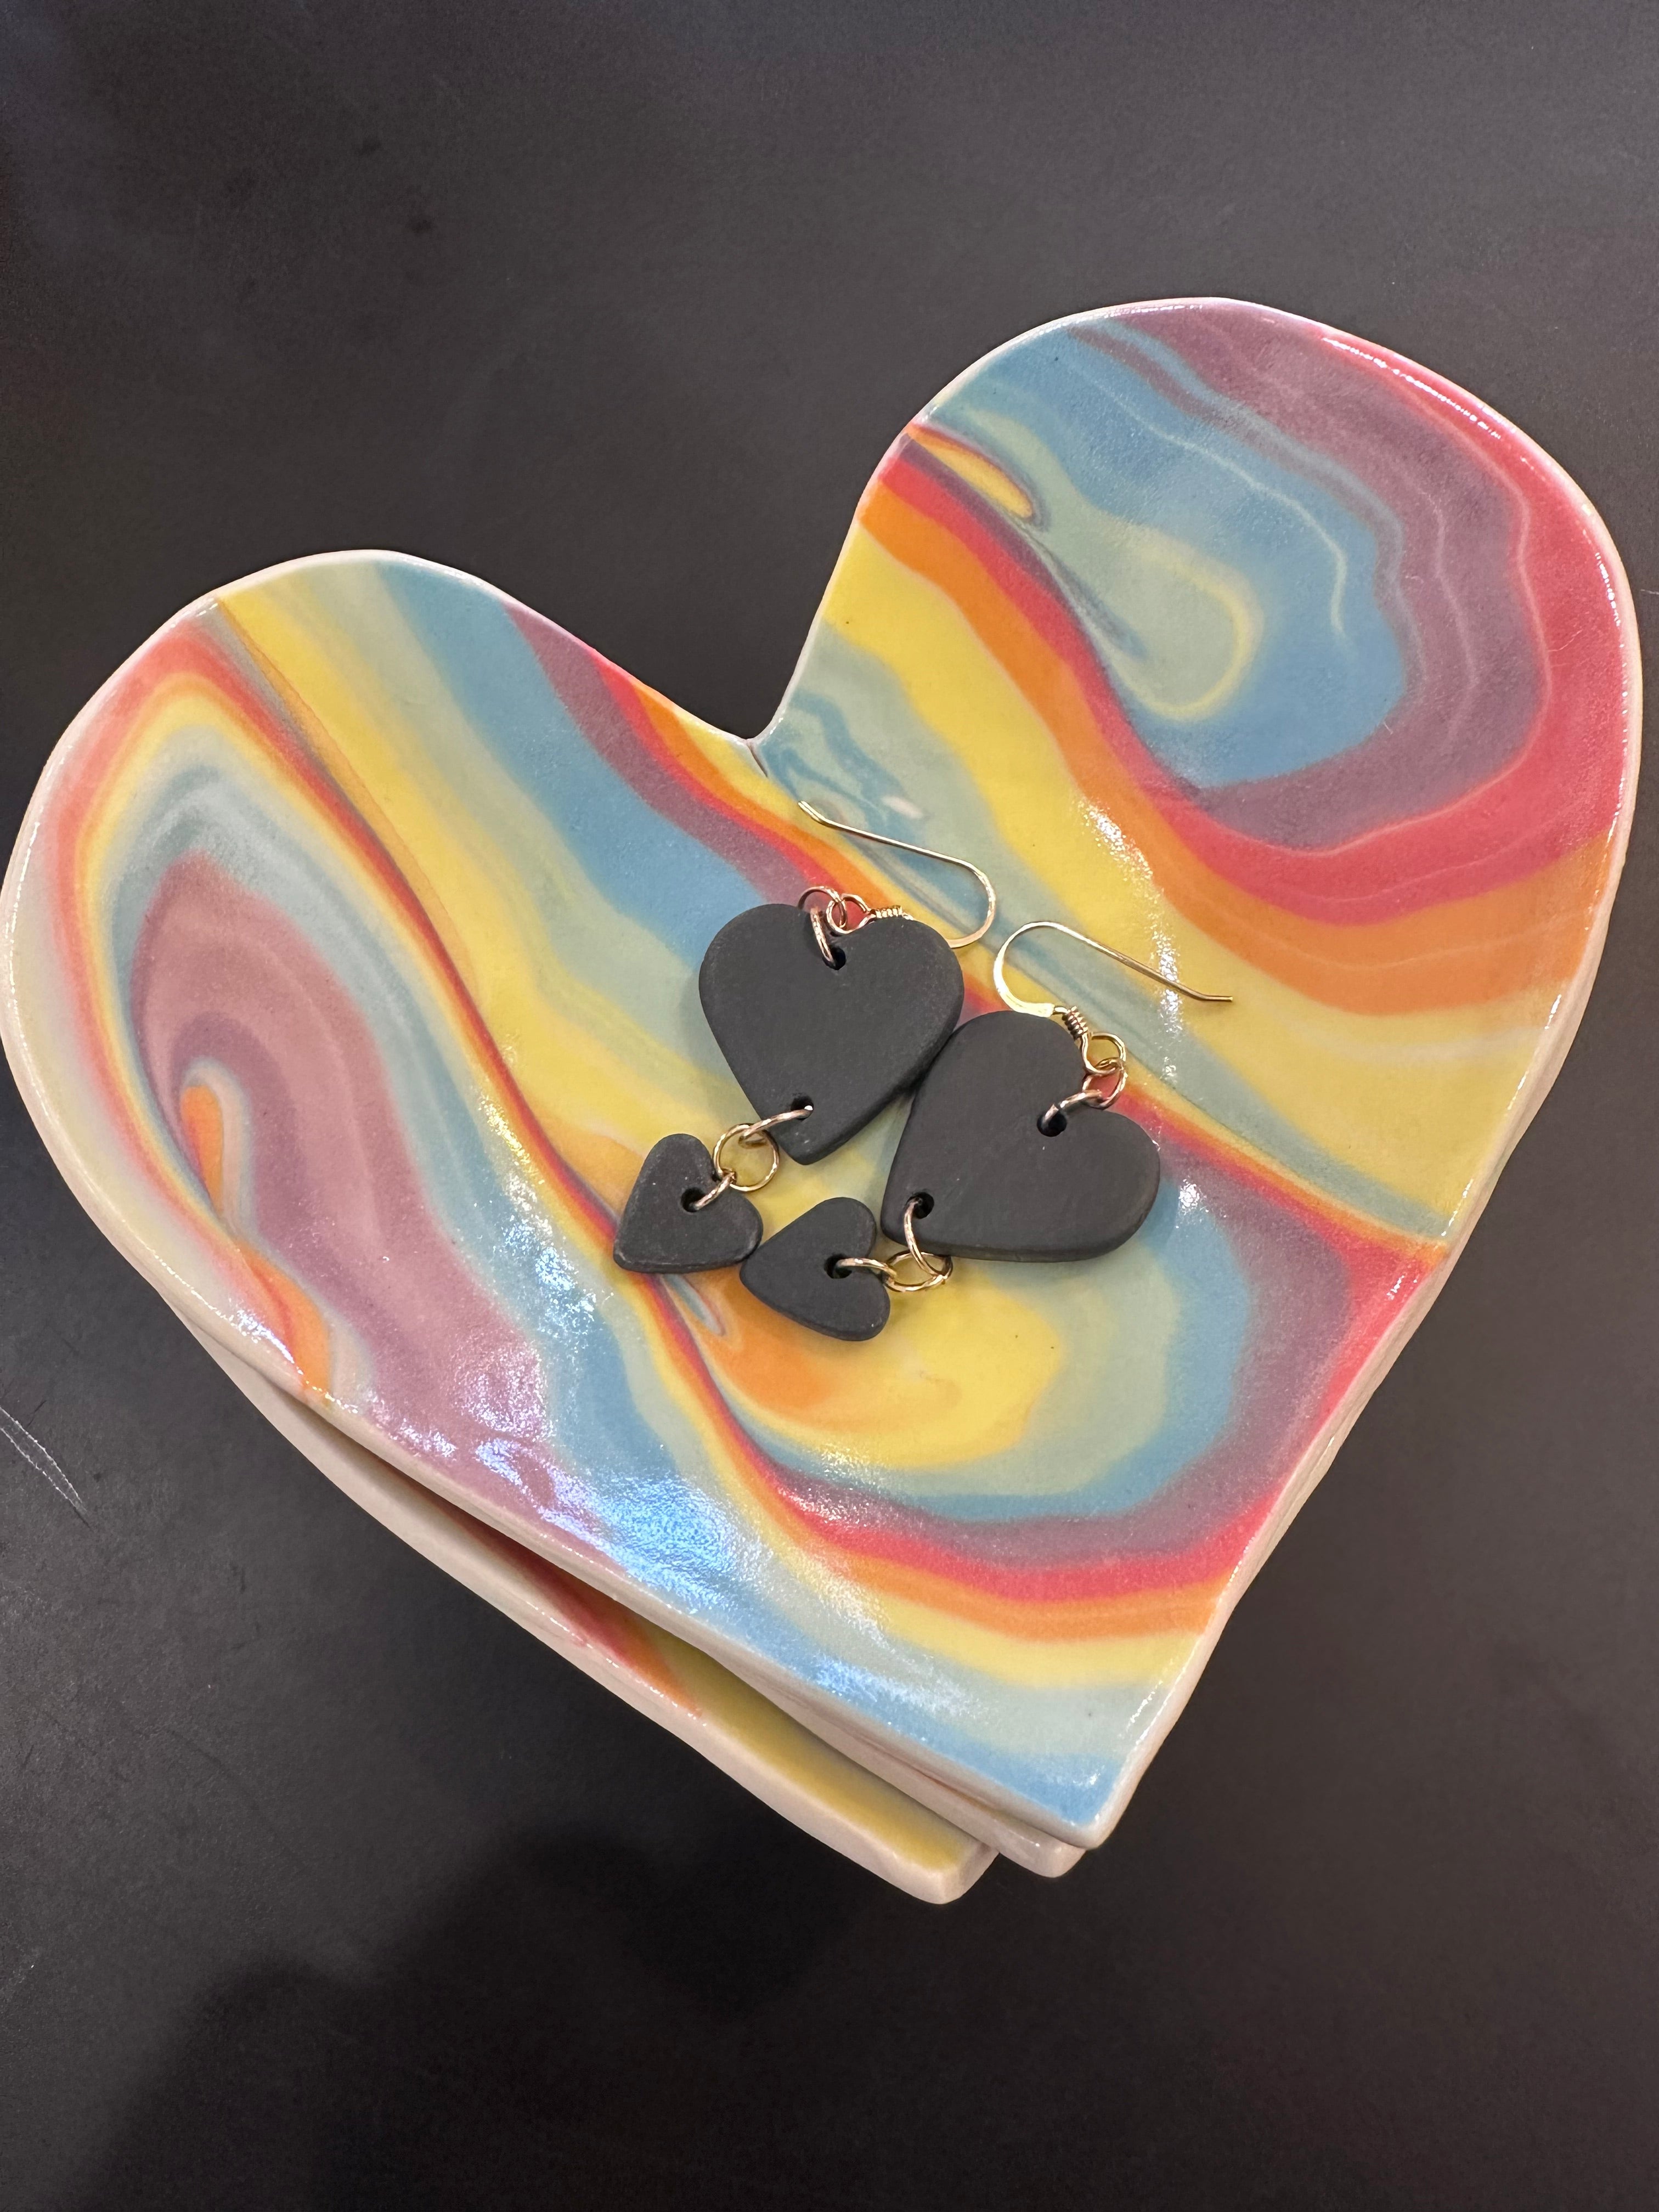 Rainbow Jewelry/soap dish